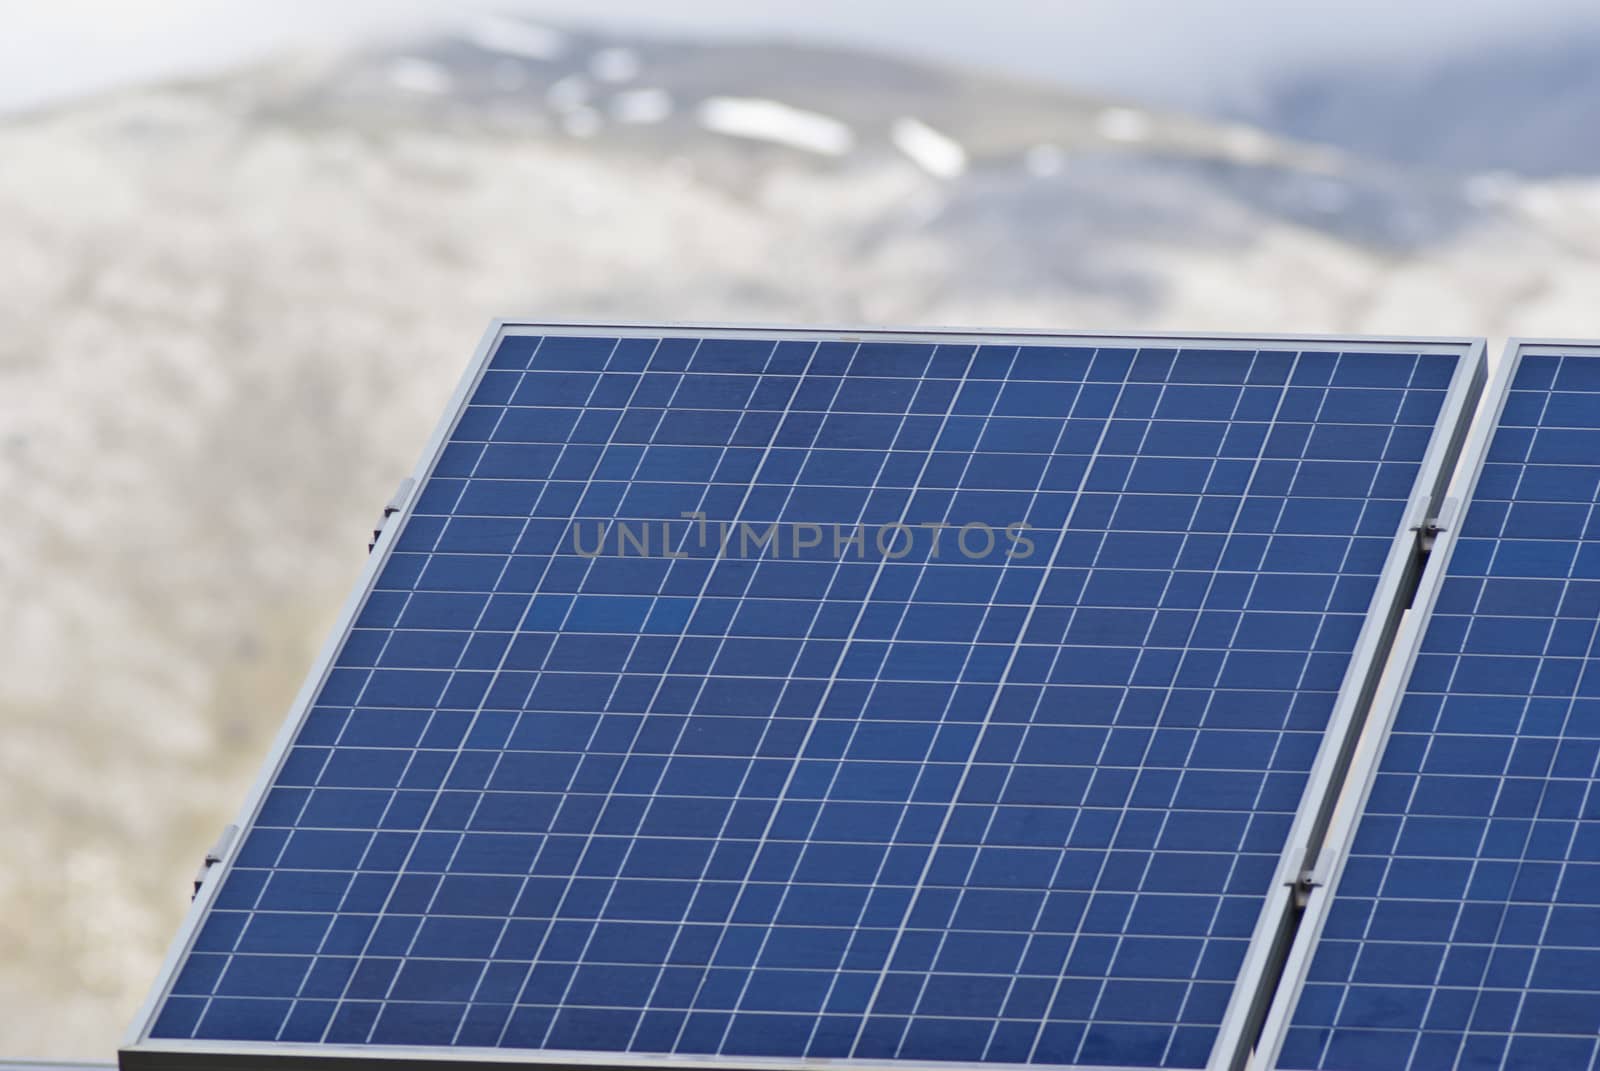 Detail of solar panels in the Madonie mountains by gandolfocannatella